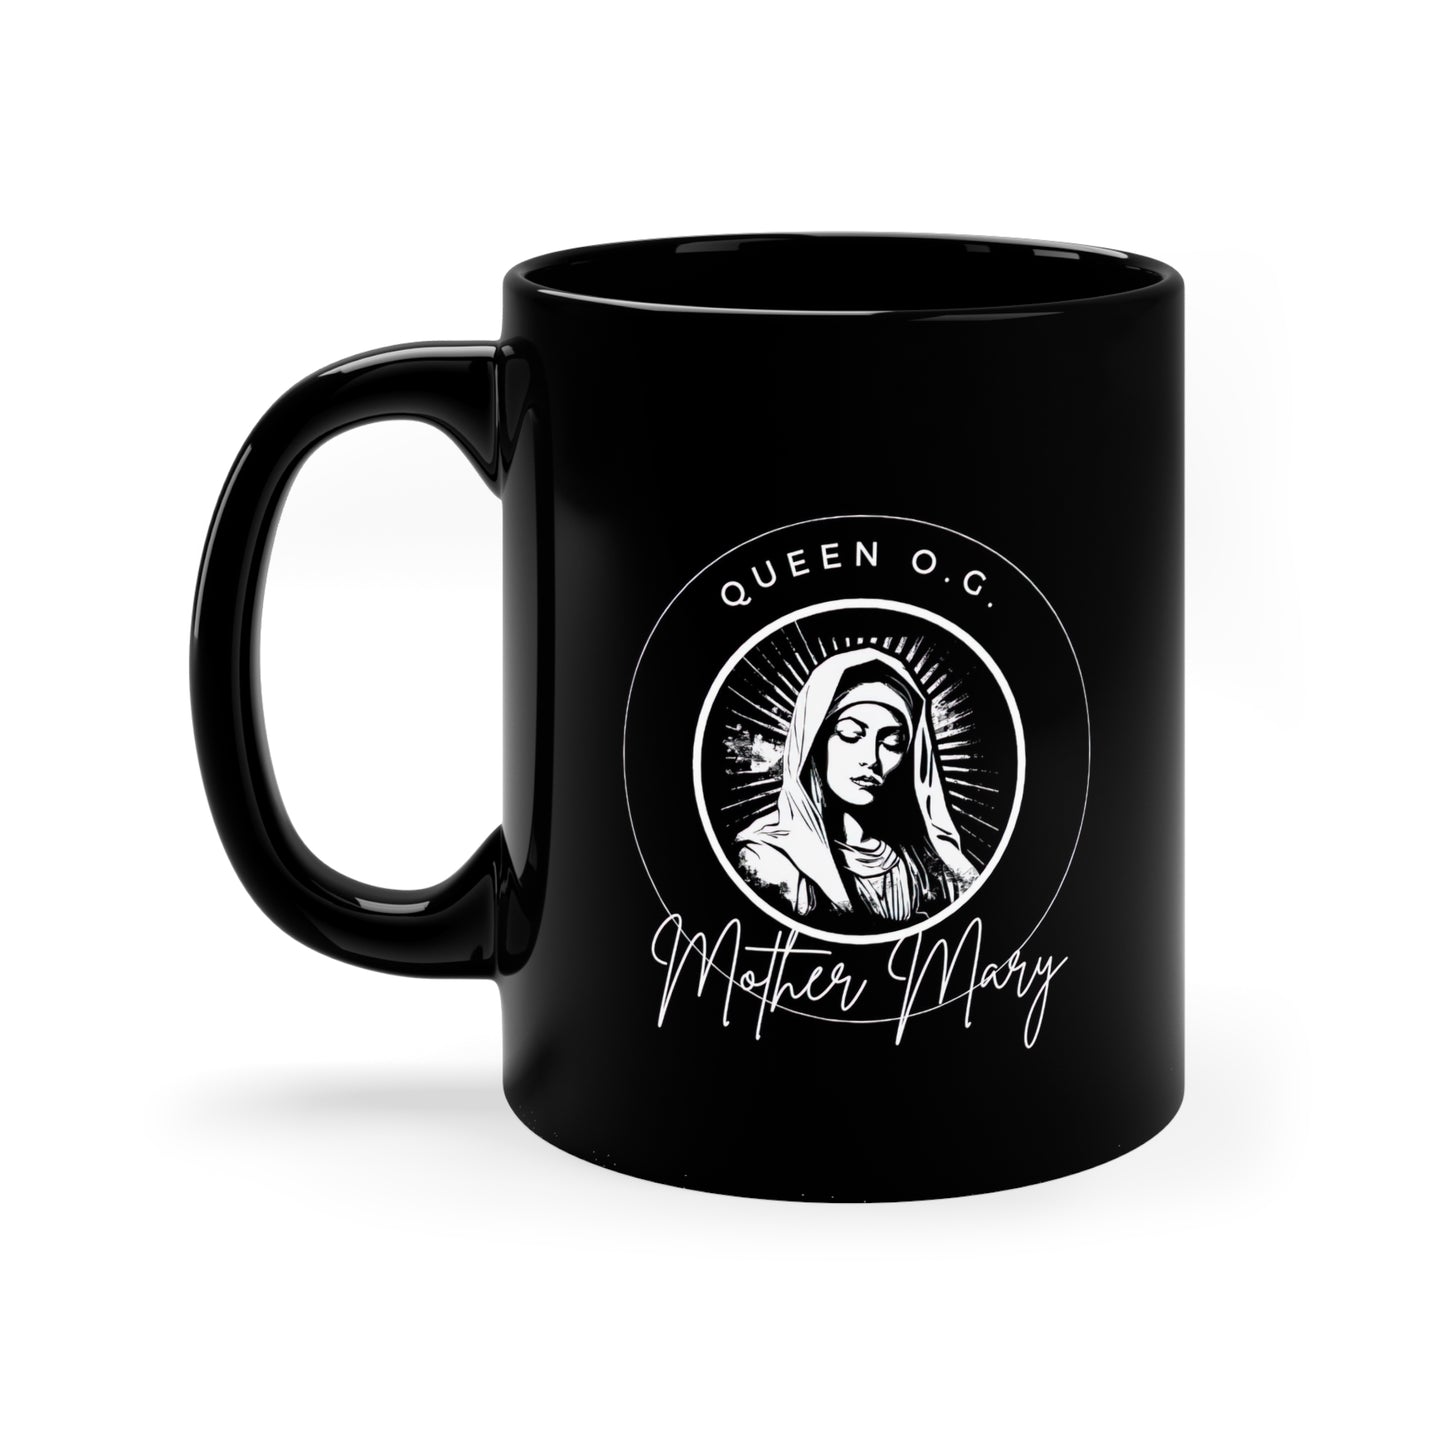 Mother Mary: The Queen O.G - 11oz Black Mug